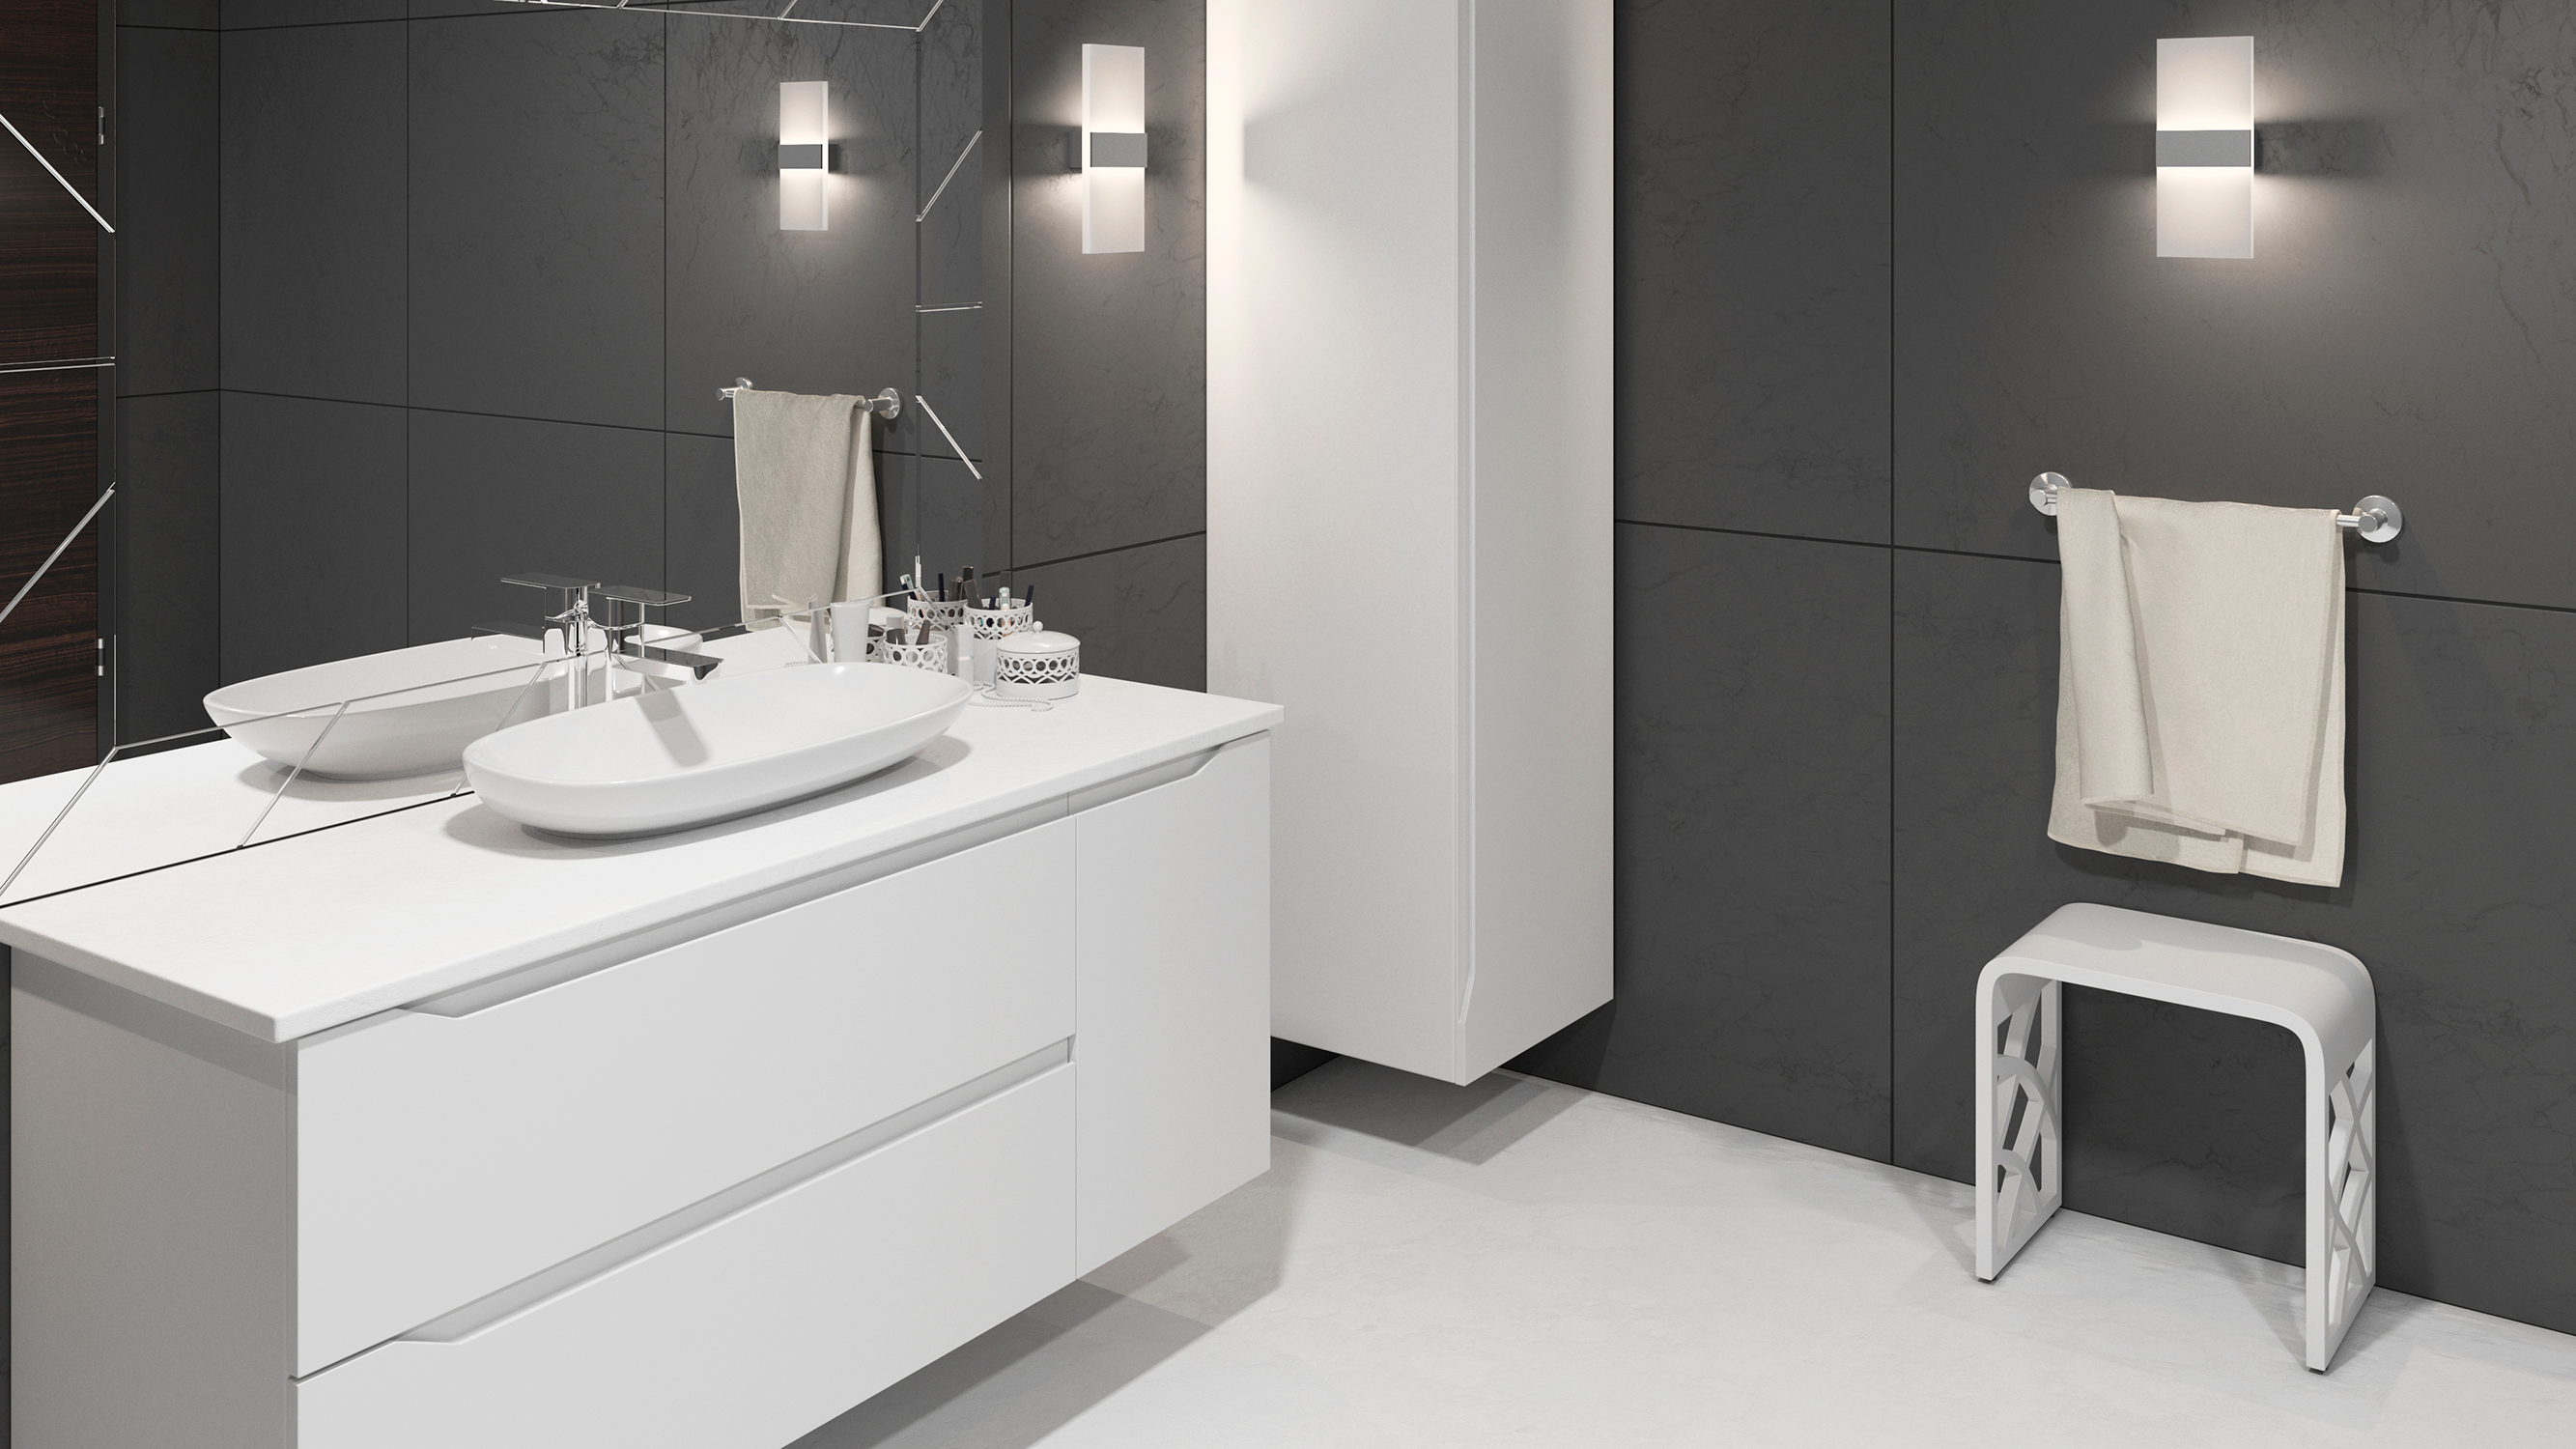 DAX Solid Surface Bathroom Stool - Matte Black (DAX-ST-05-B)